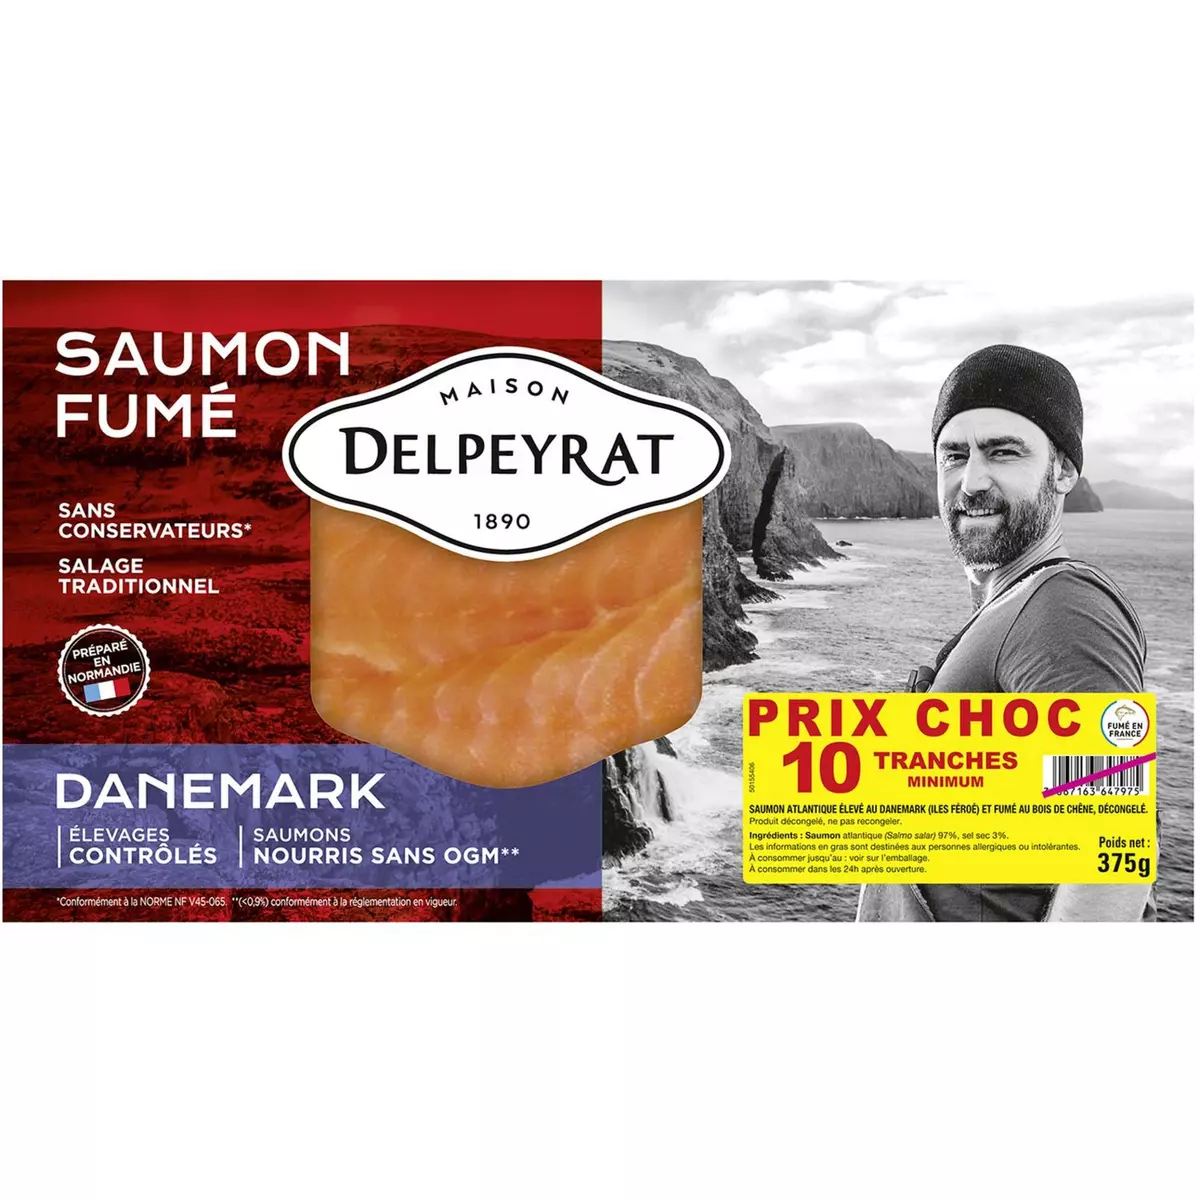 DELPEYRAT Saumon fumé origine Danemark 10 tranches minimum 325g